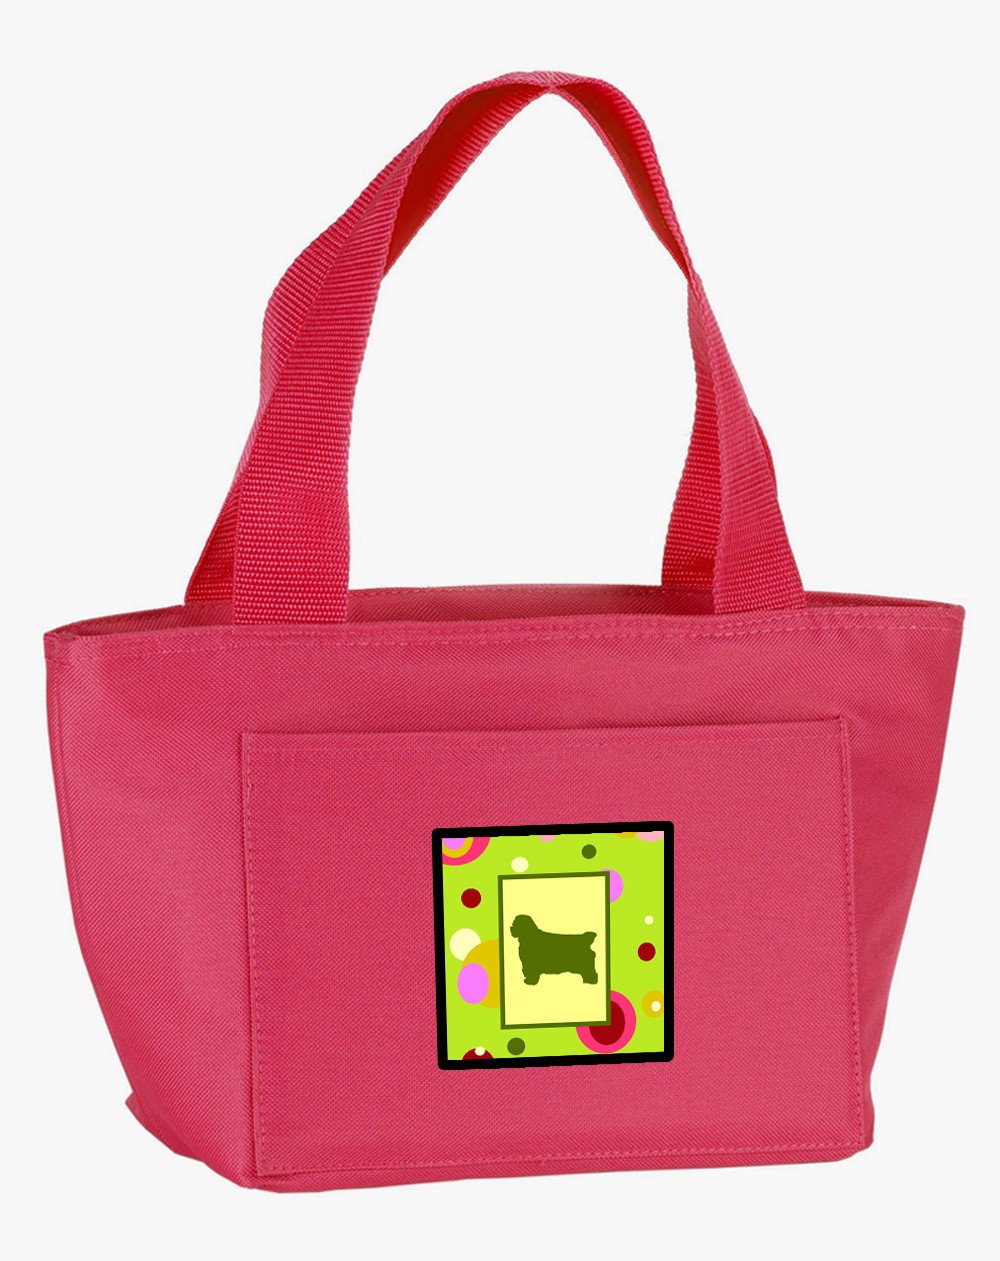 Clumber Spaniel Lunch Bag CK1021PK-8808 by Caroline's Treasures